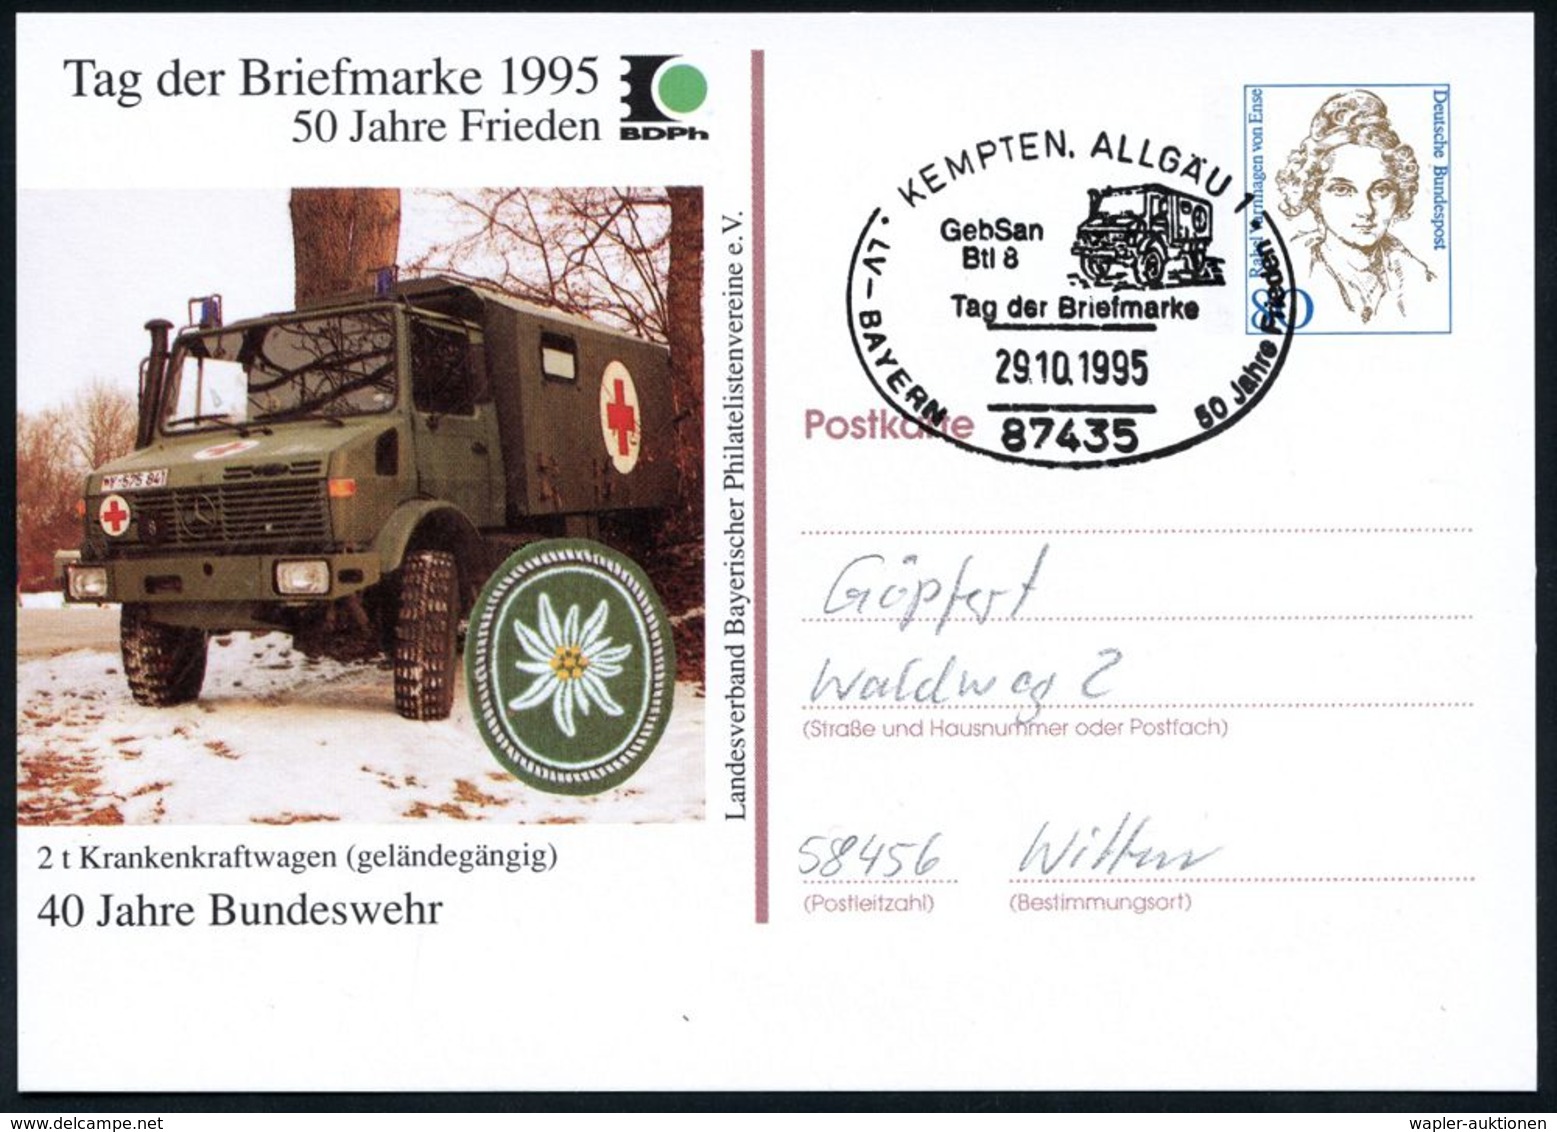 KRAFTFAHR-TRUPPEN / MILITÄR-KFZ. (ohne PANZER) : 87435 KEMPTEN,ALLGÄU 1/ Tag Der Briefmarke.. 1995 (29.10.) SSt = MB "Un - Cars